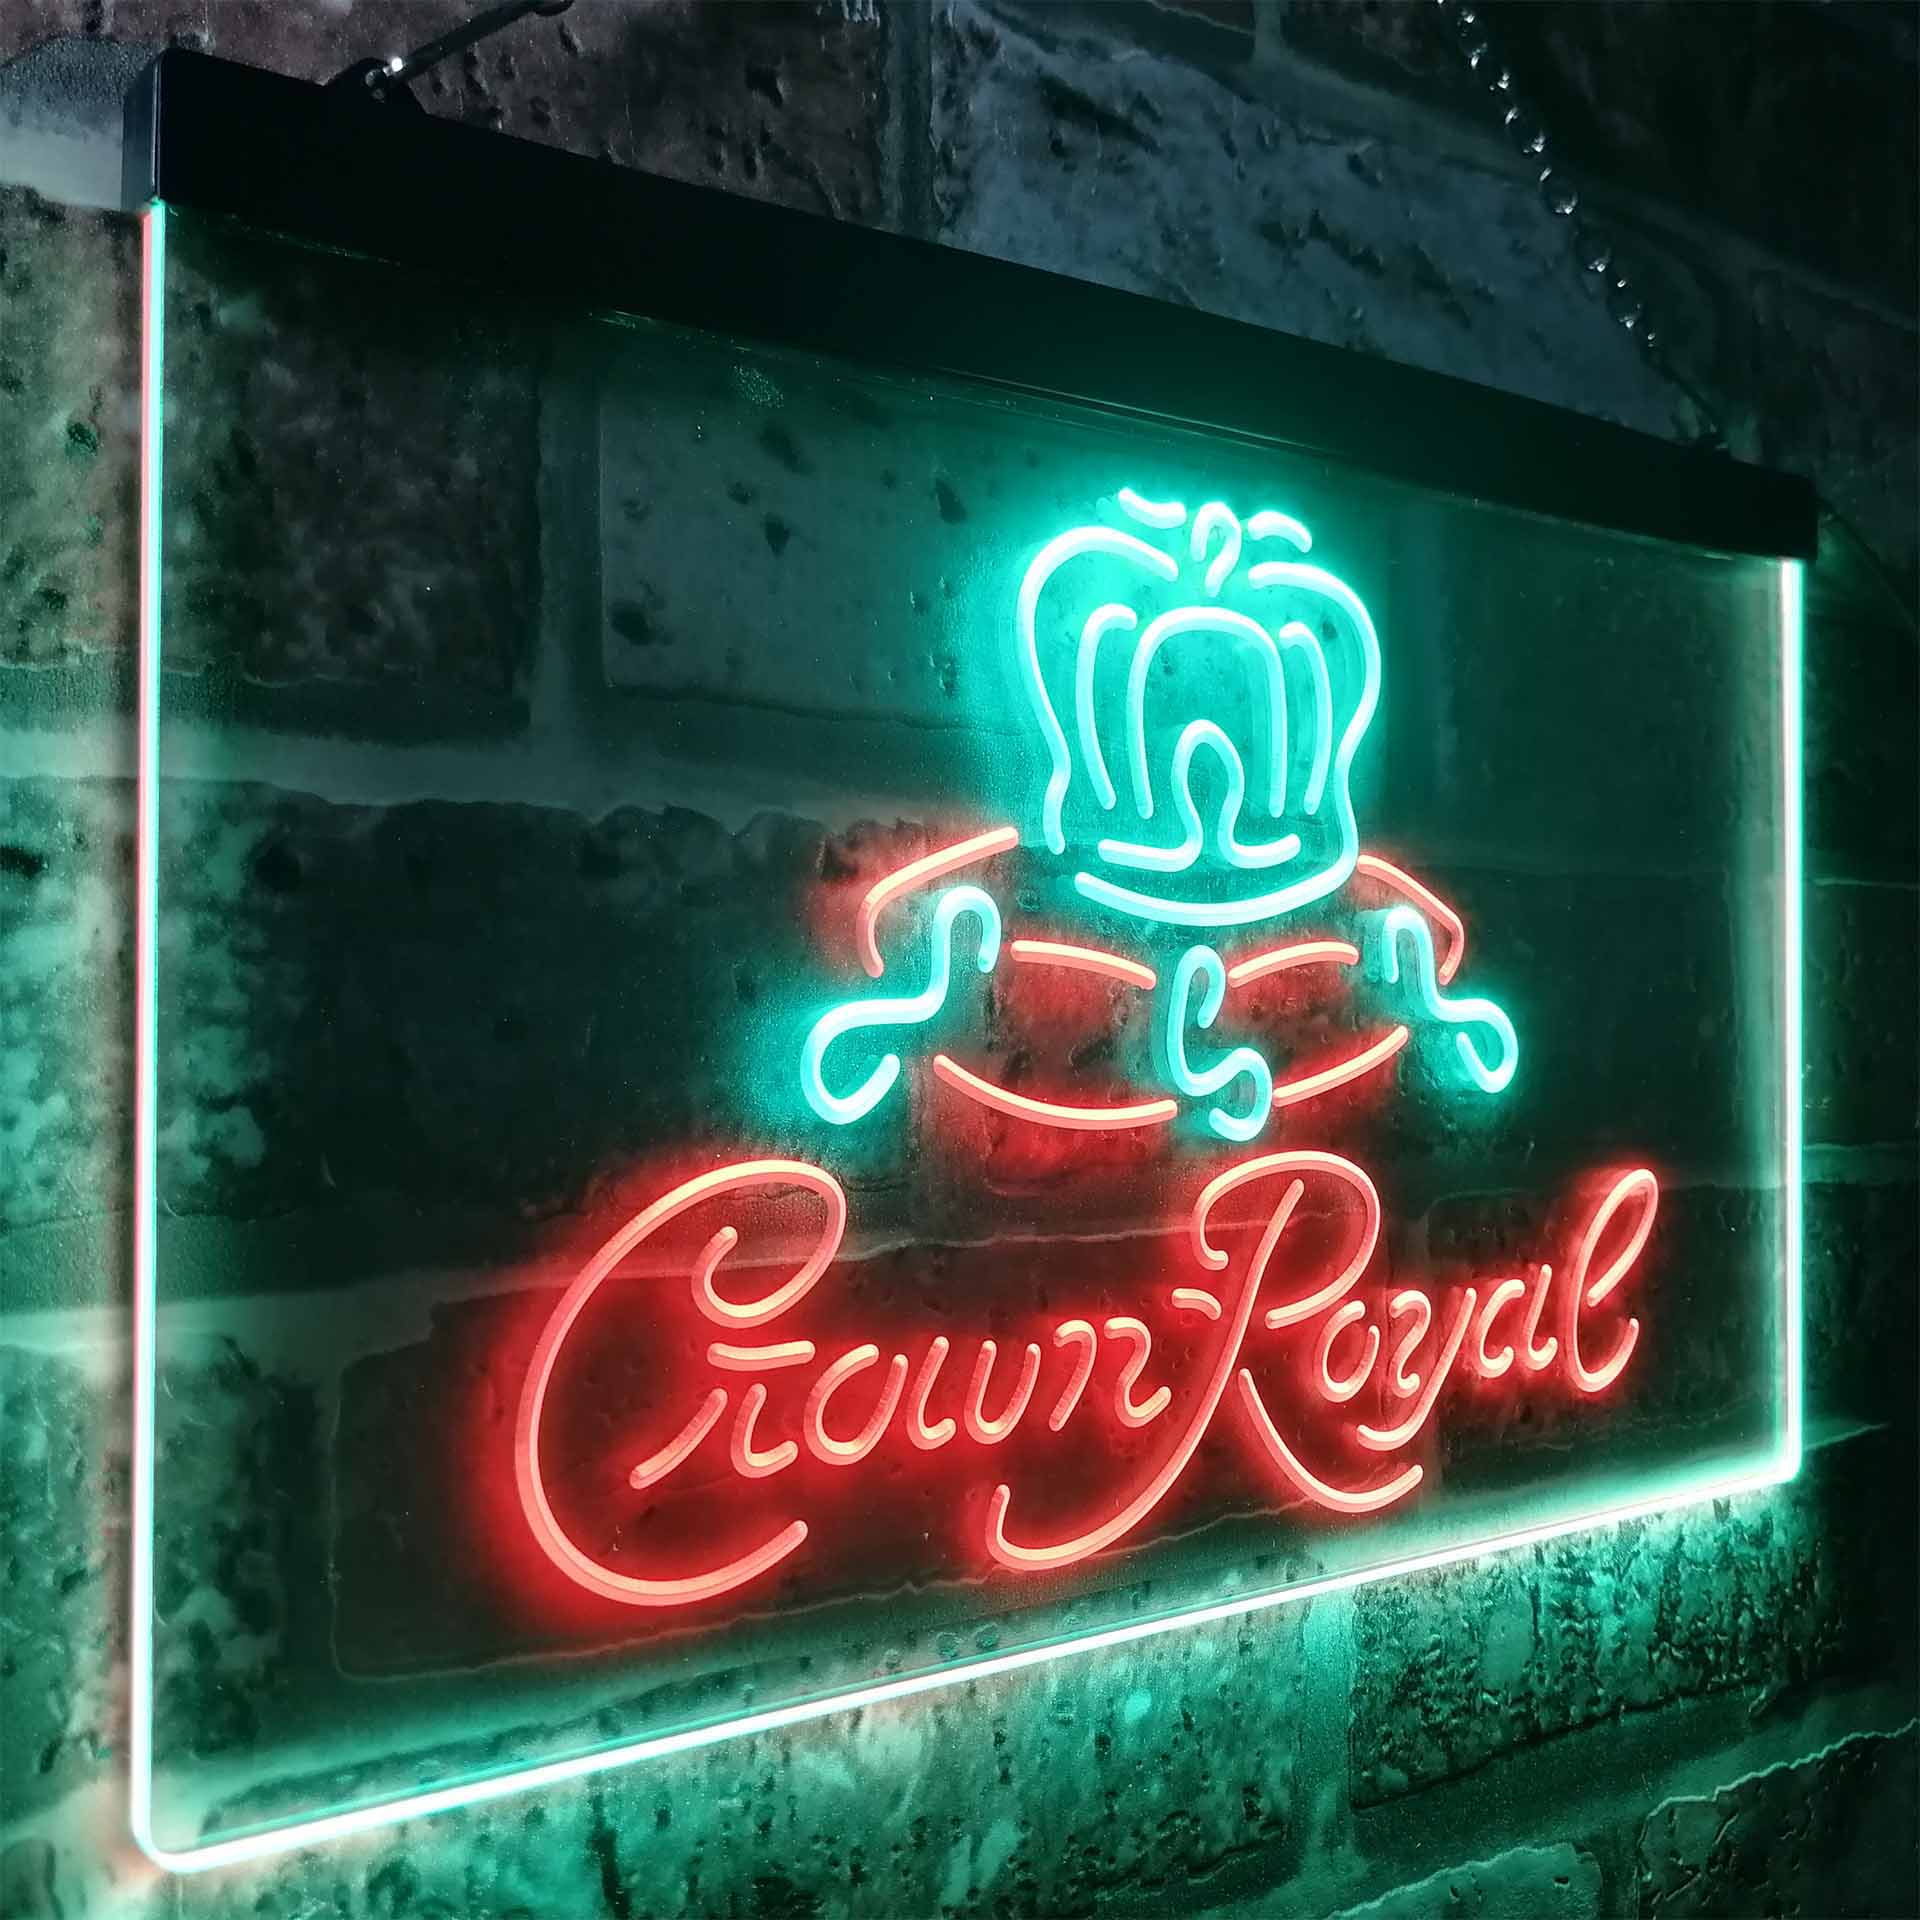 Crown Royal Beer Bar Neon-Like LED Sign